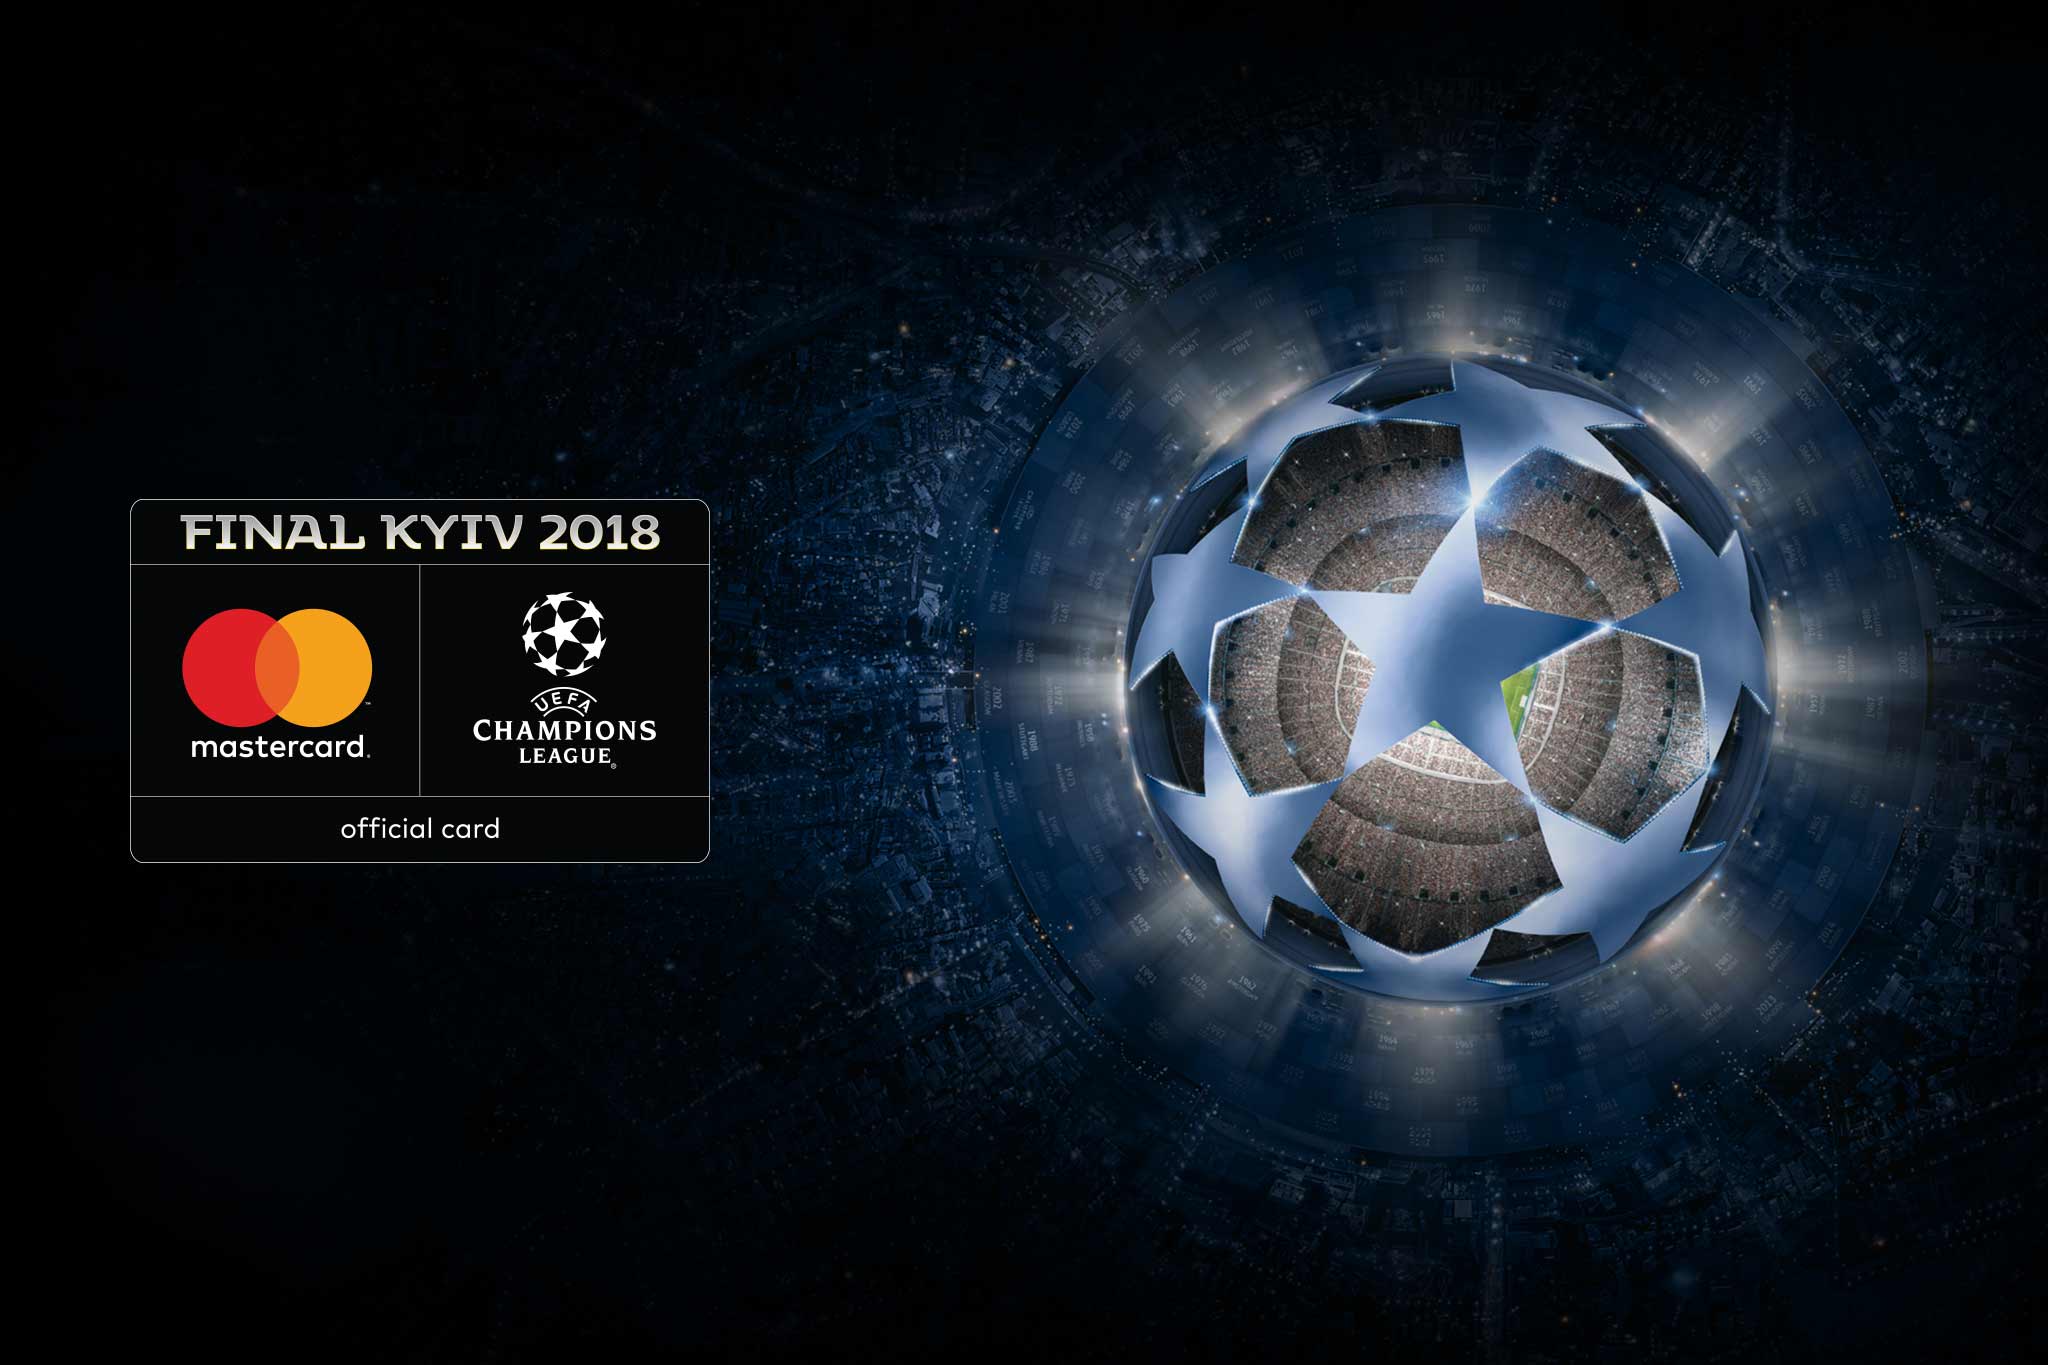 uefa champions league tickets 2018